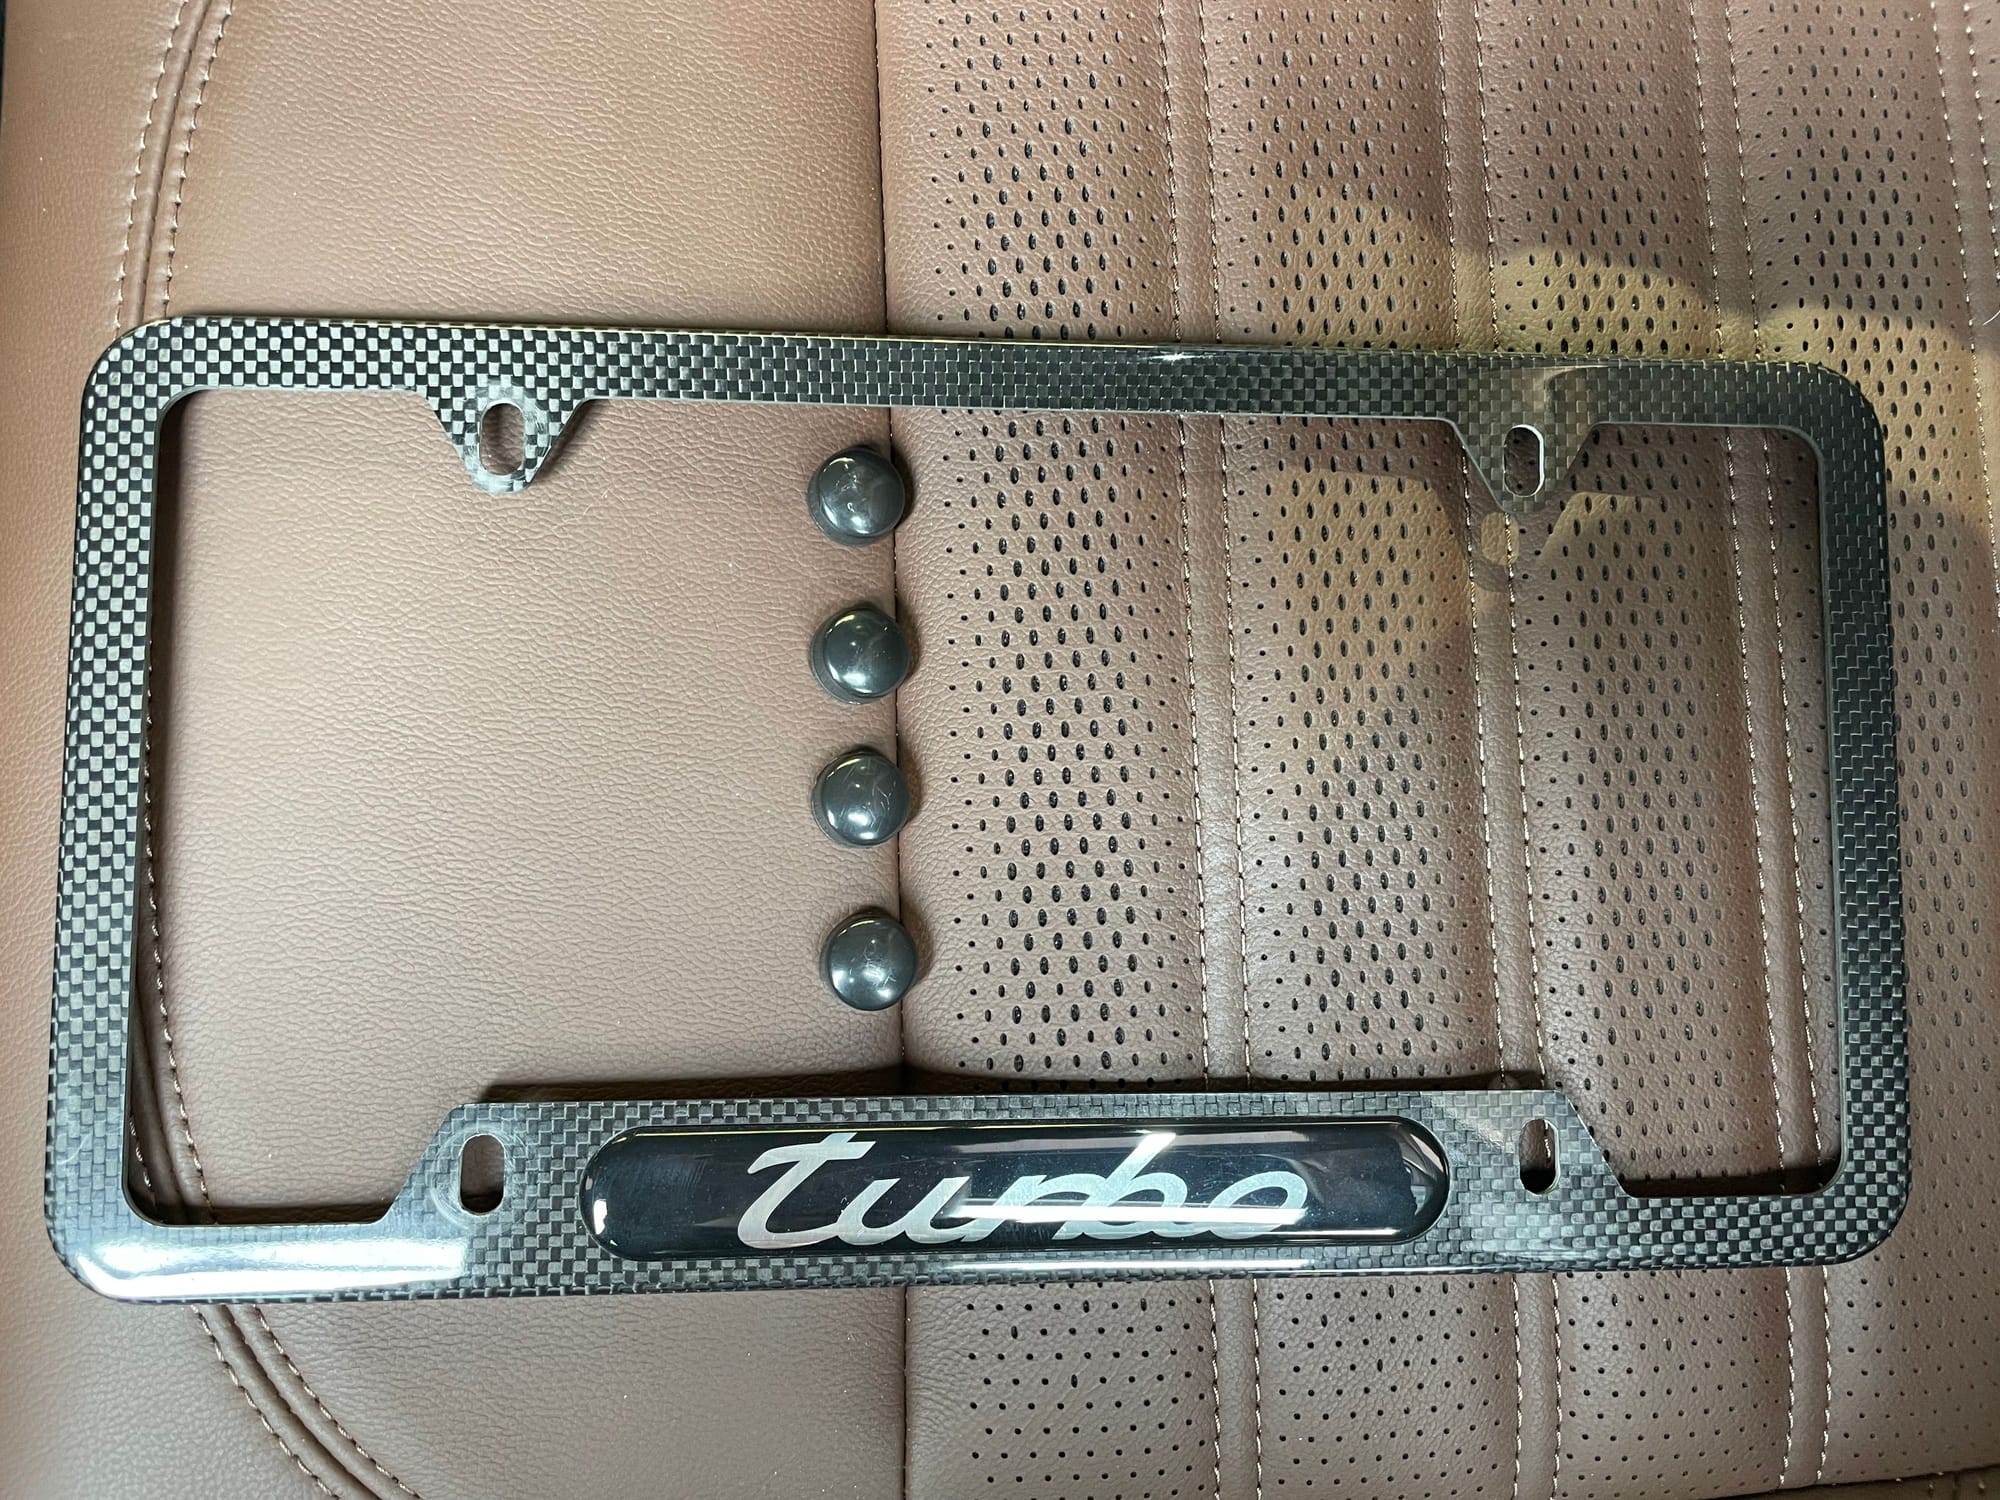 Accessories - 911 Turbo Carbon Fiber License Plate Frame - Used - 2000 to 2021 Porsche 911 - Boston, MA 02127, United States